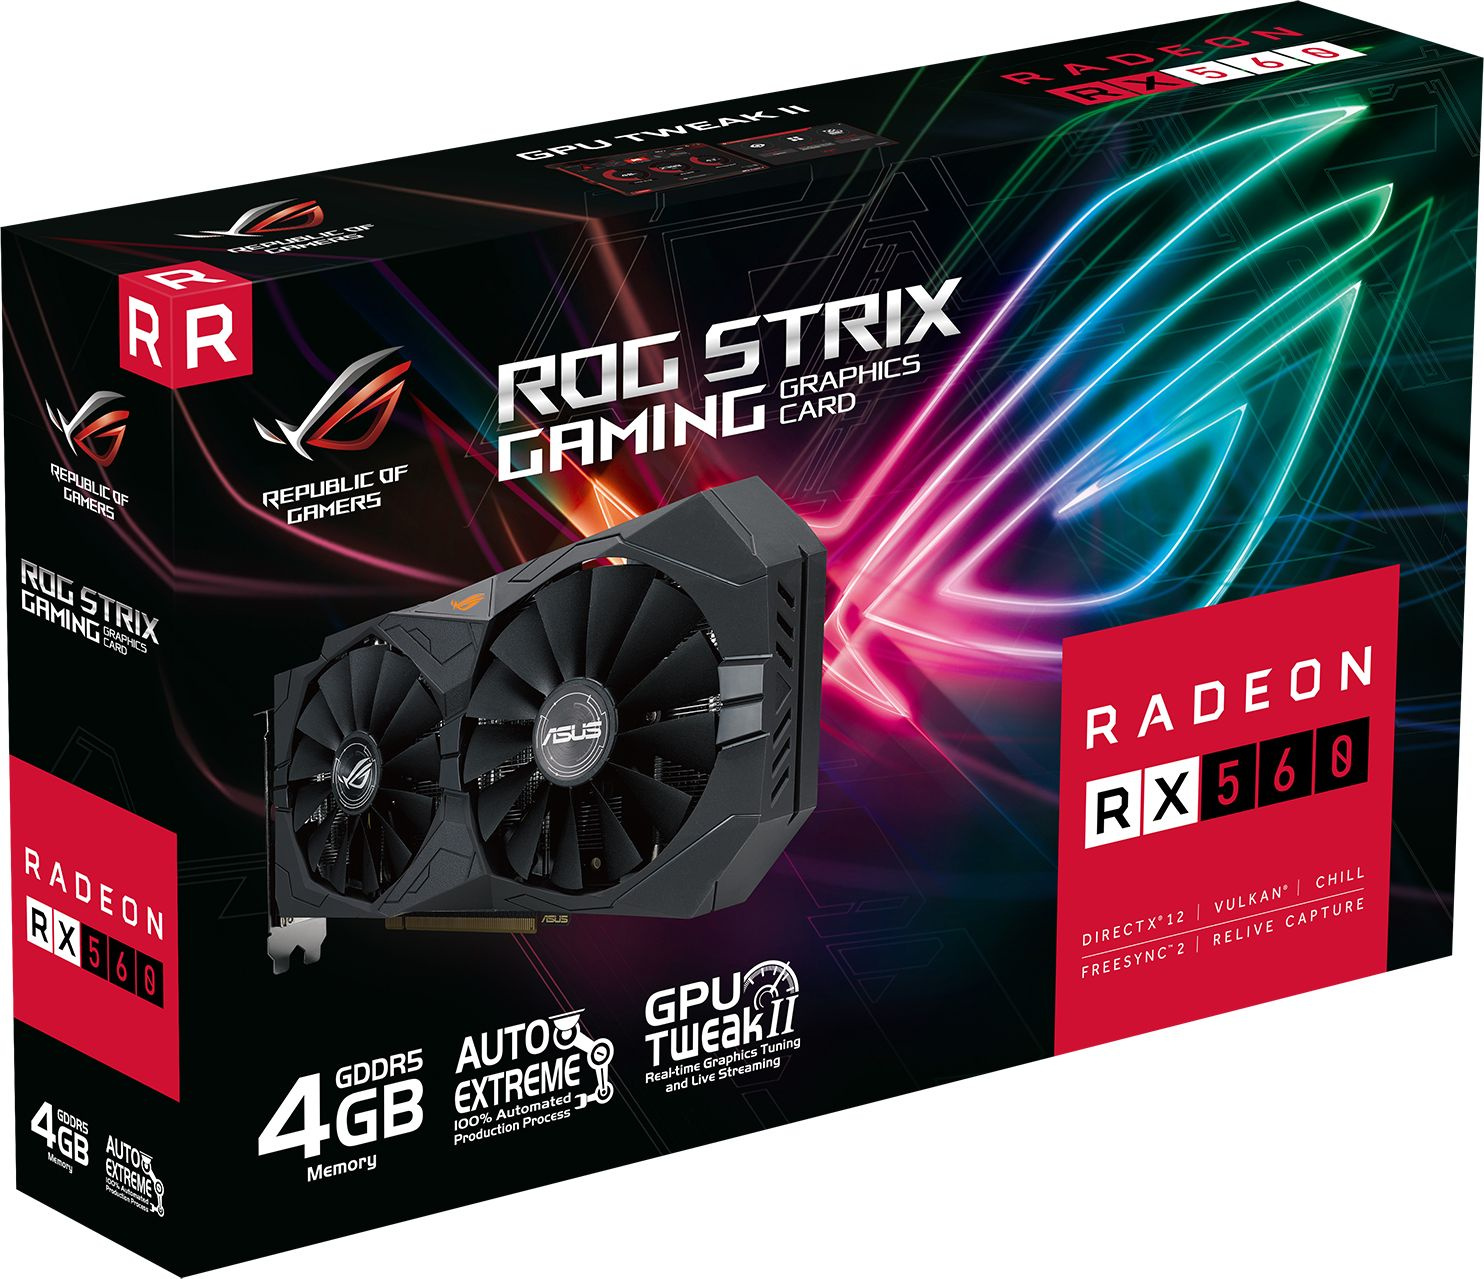 Rx560 asus strix gaming. RX 560 ROG Strix 4gb. RX 560 4gb ASUS Strix. ASUS AMD rx560 ROG Strix. ASUS Radeon RX 560 ROG Strix Gaming v2 4g.